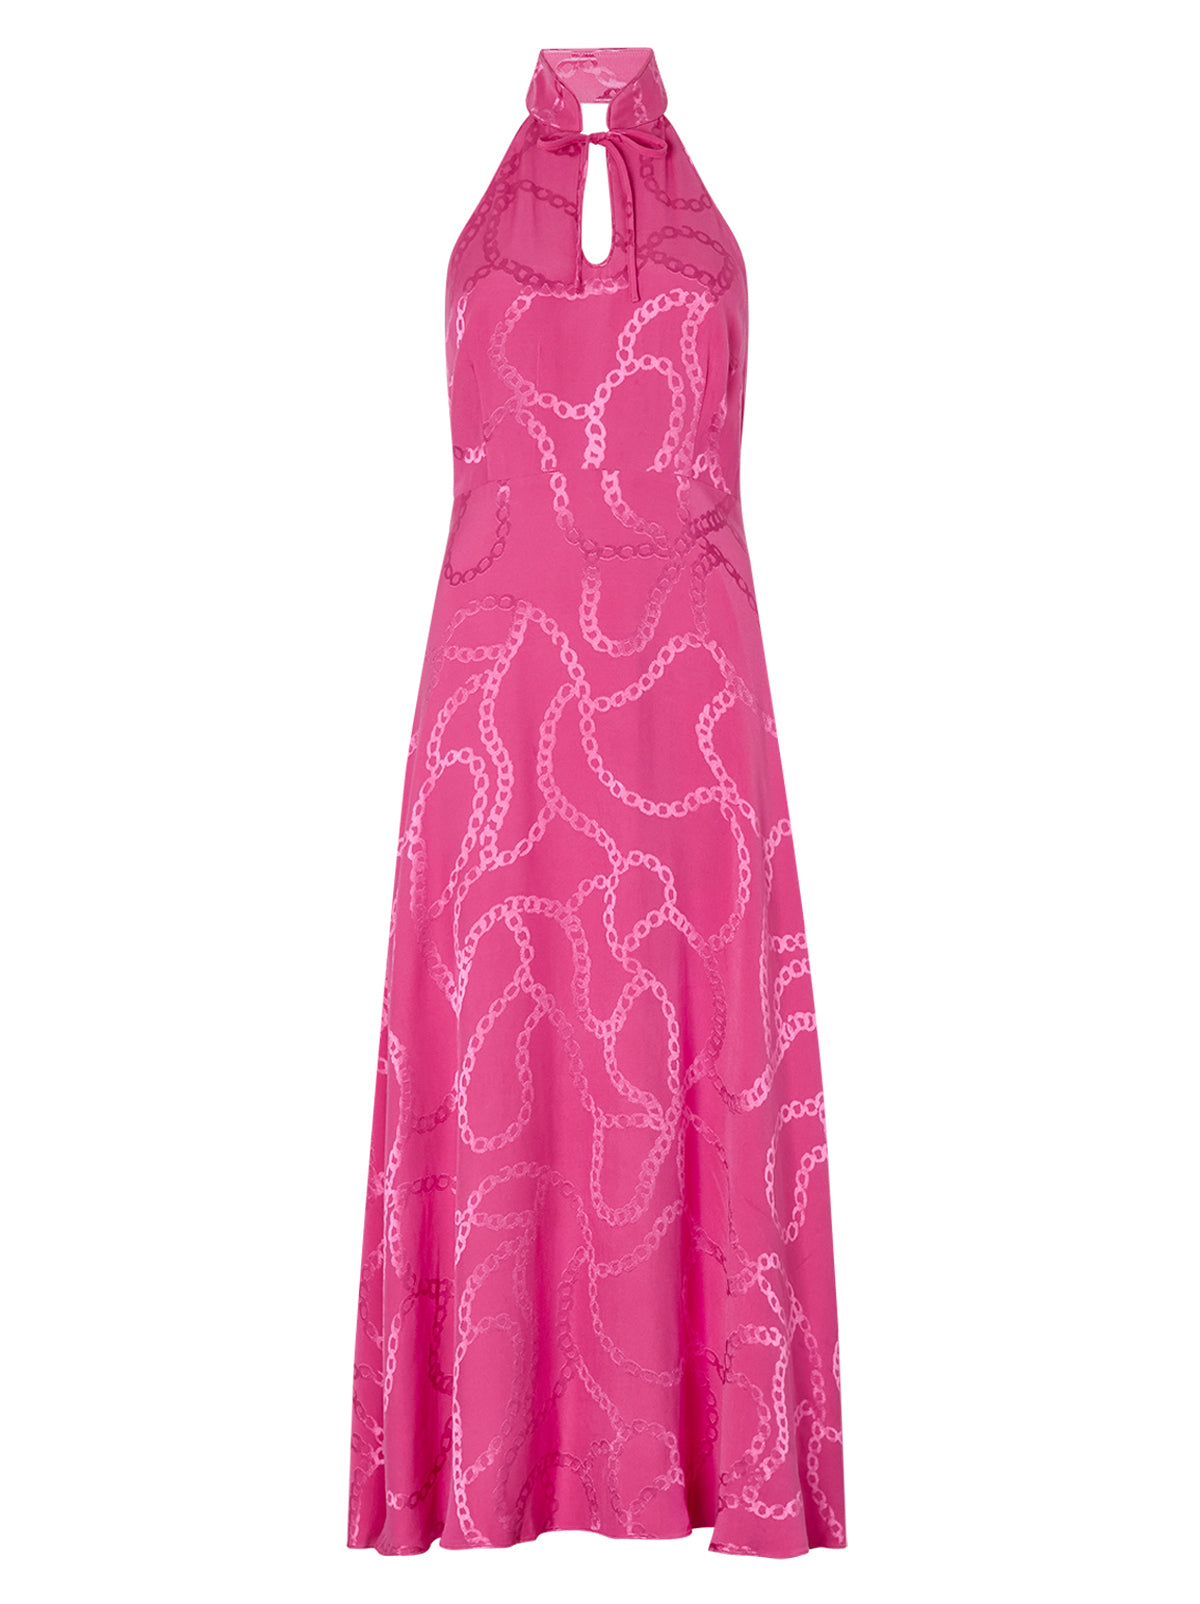 Tali Pink Chain Jacquard Halterneck Dress By KITRI Studio